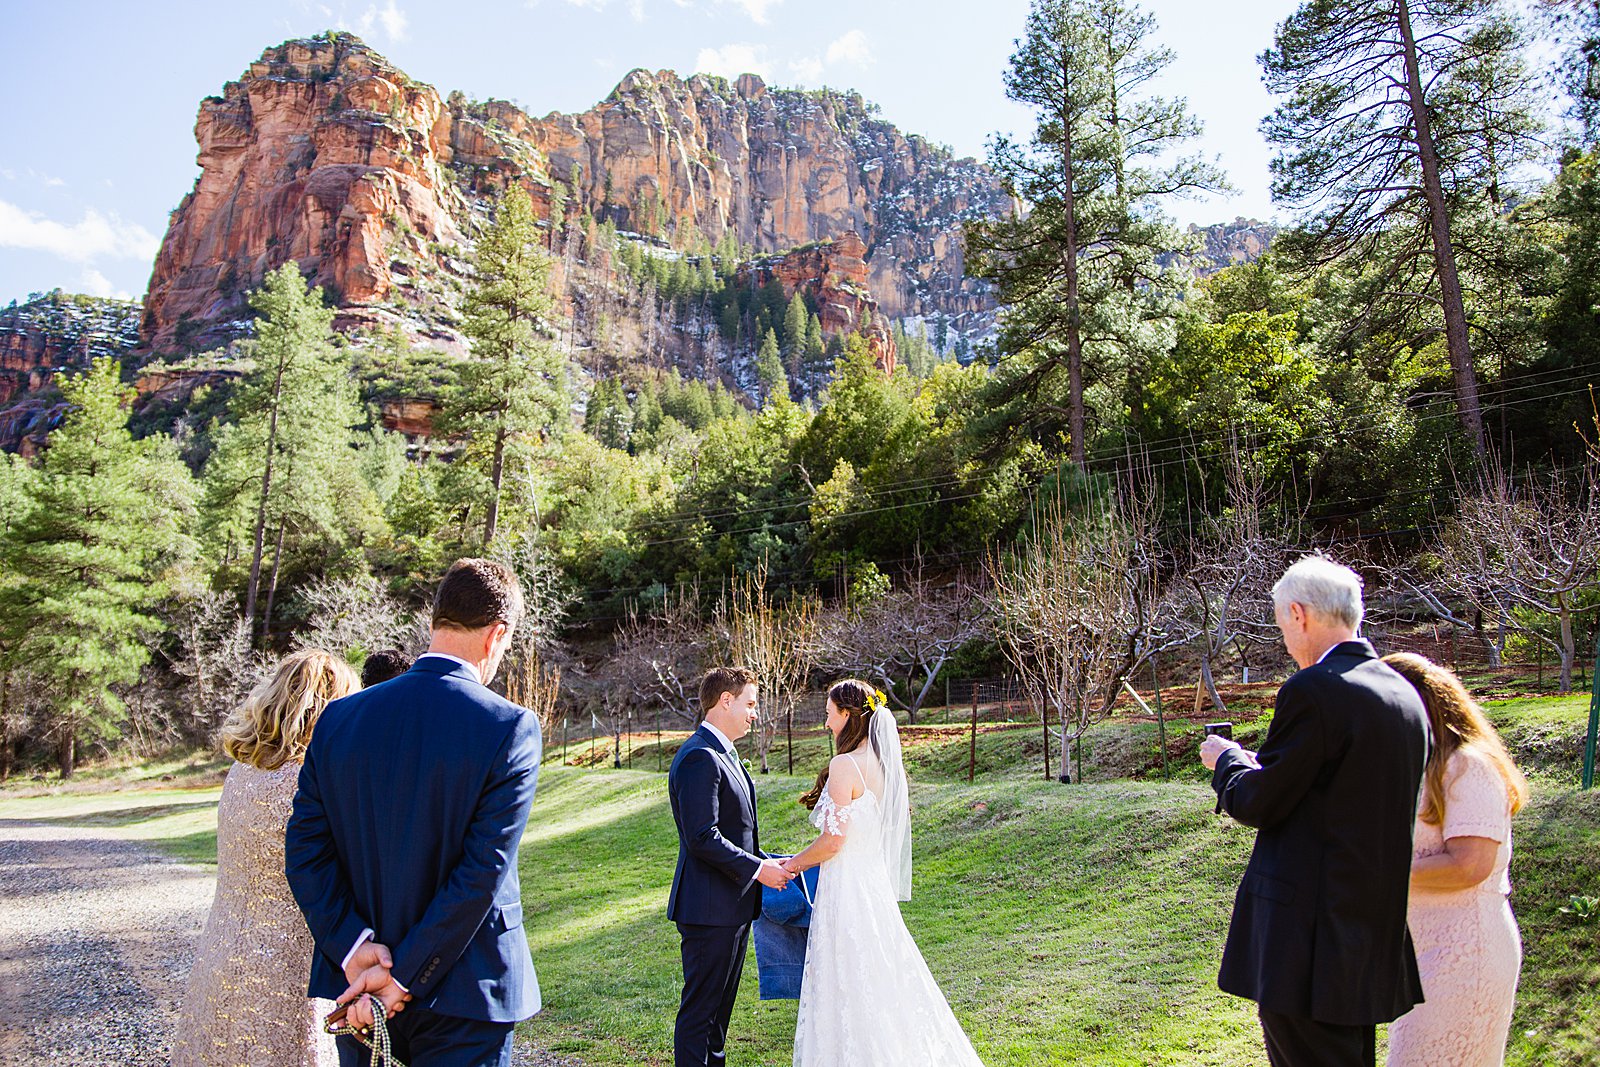 Wedding ceremony at Slide Rock by Arizona elopement photographer PMA Photography.